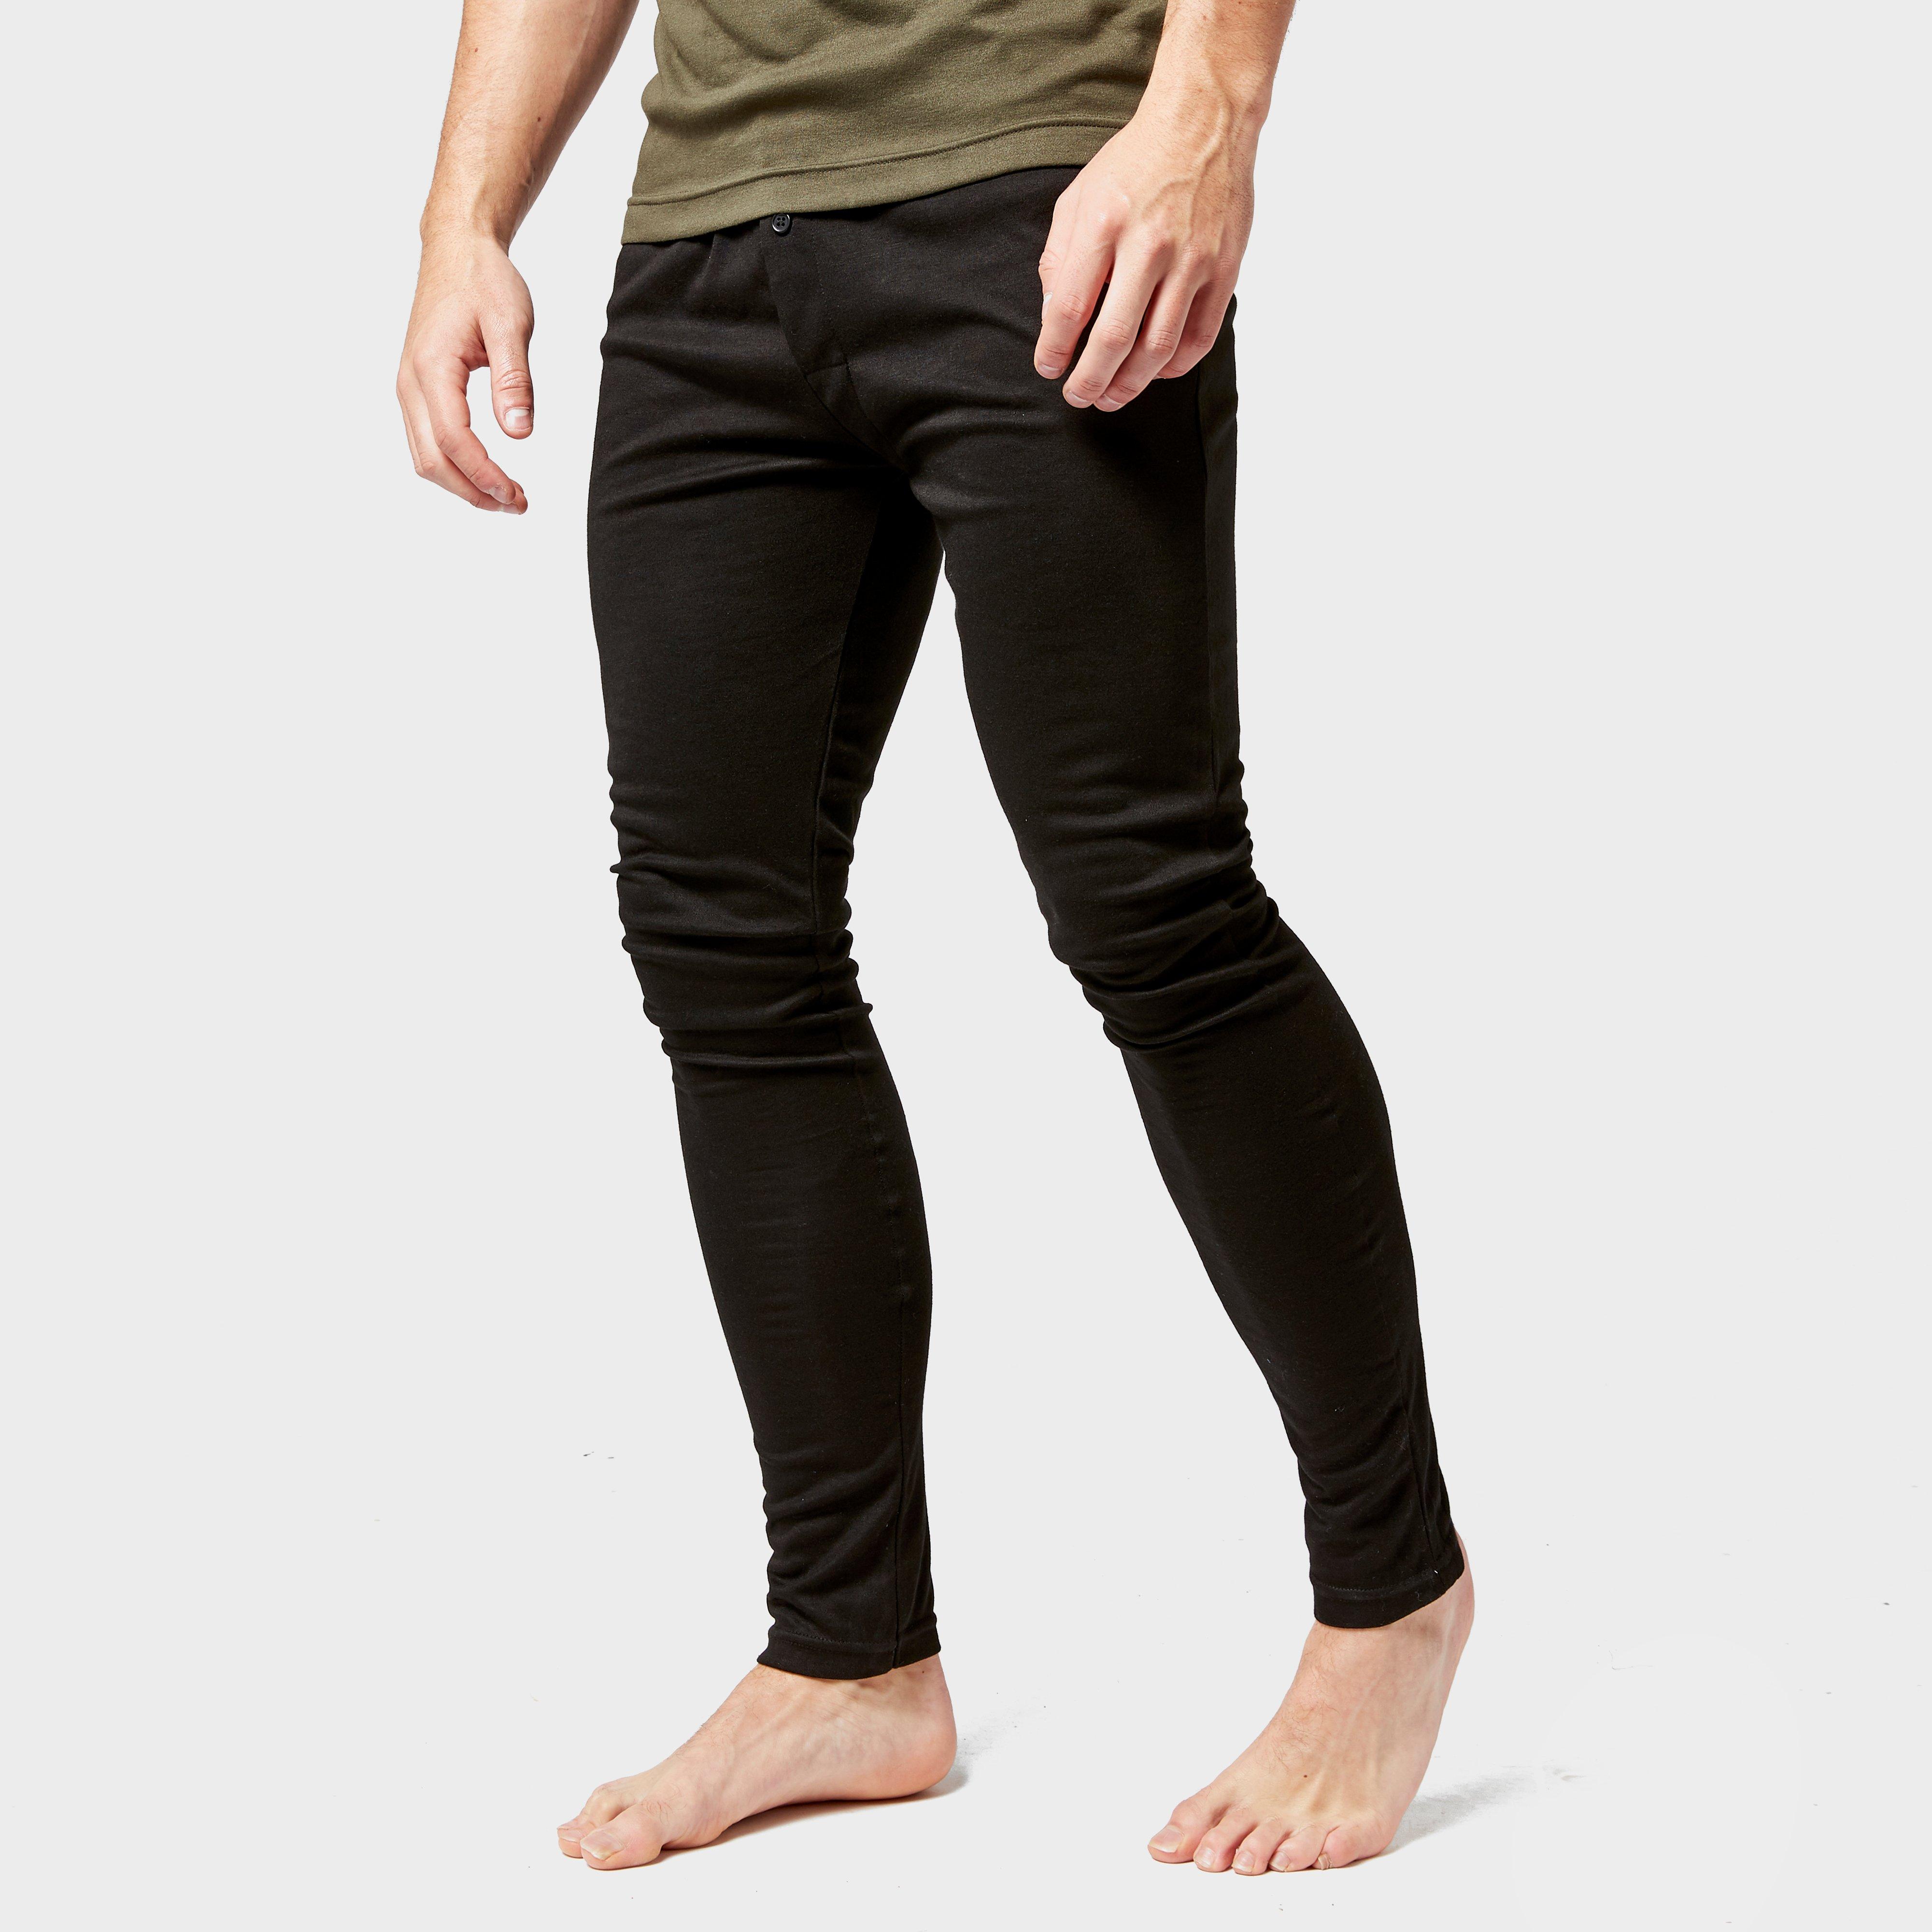 Peter Storm Mens Thermal Base Layer Pants - Black/black  Black/black